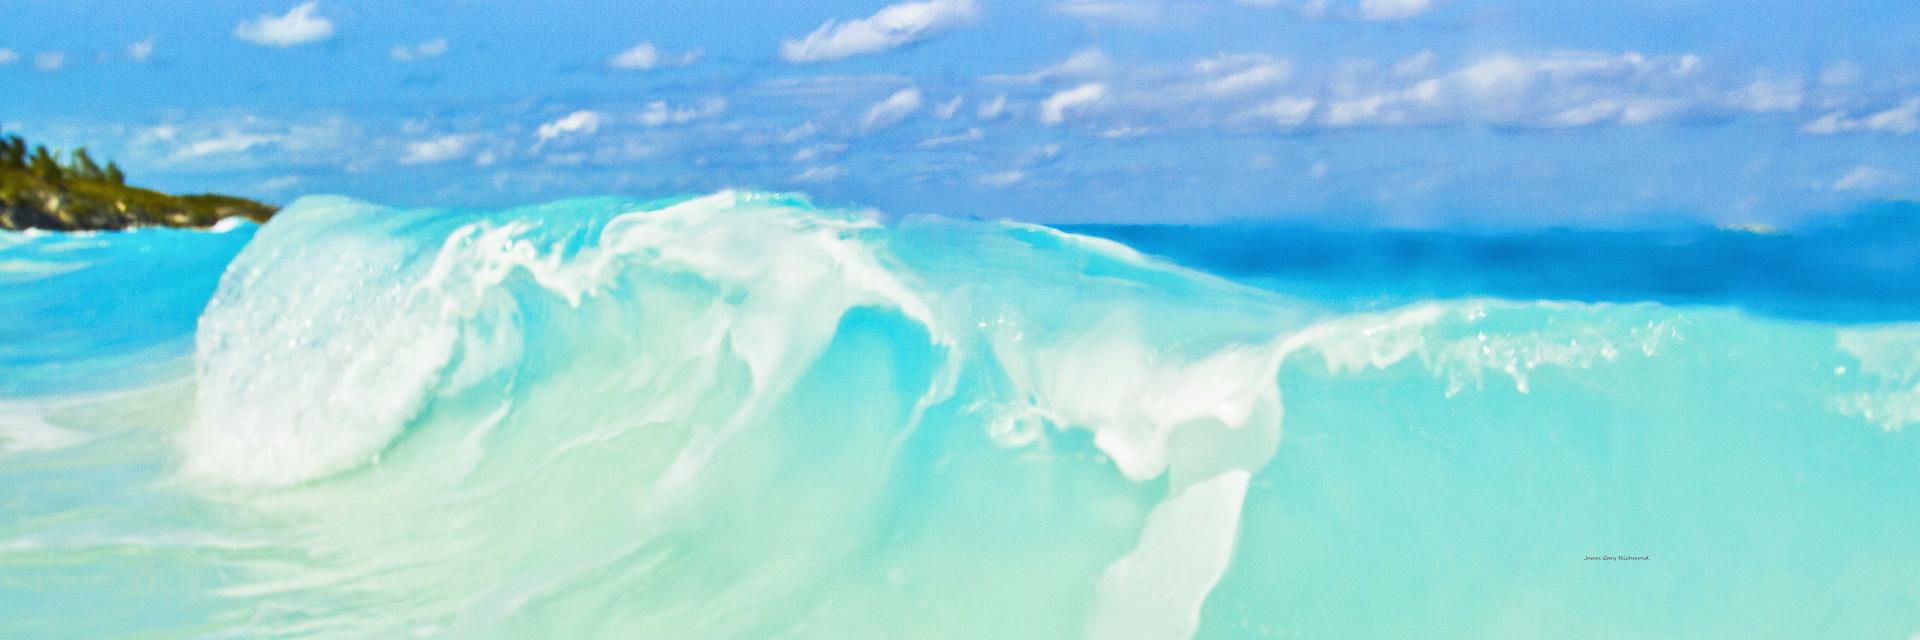 40257p seascape, crashing wave, bahamas, tropical,, .jpg